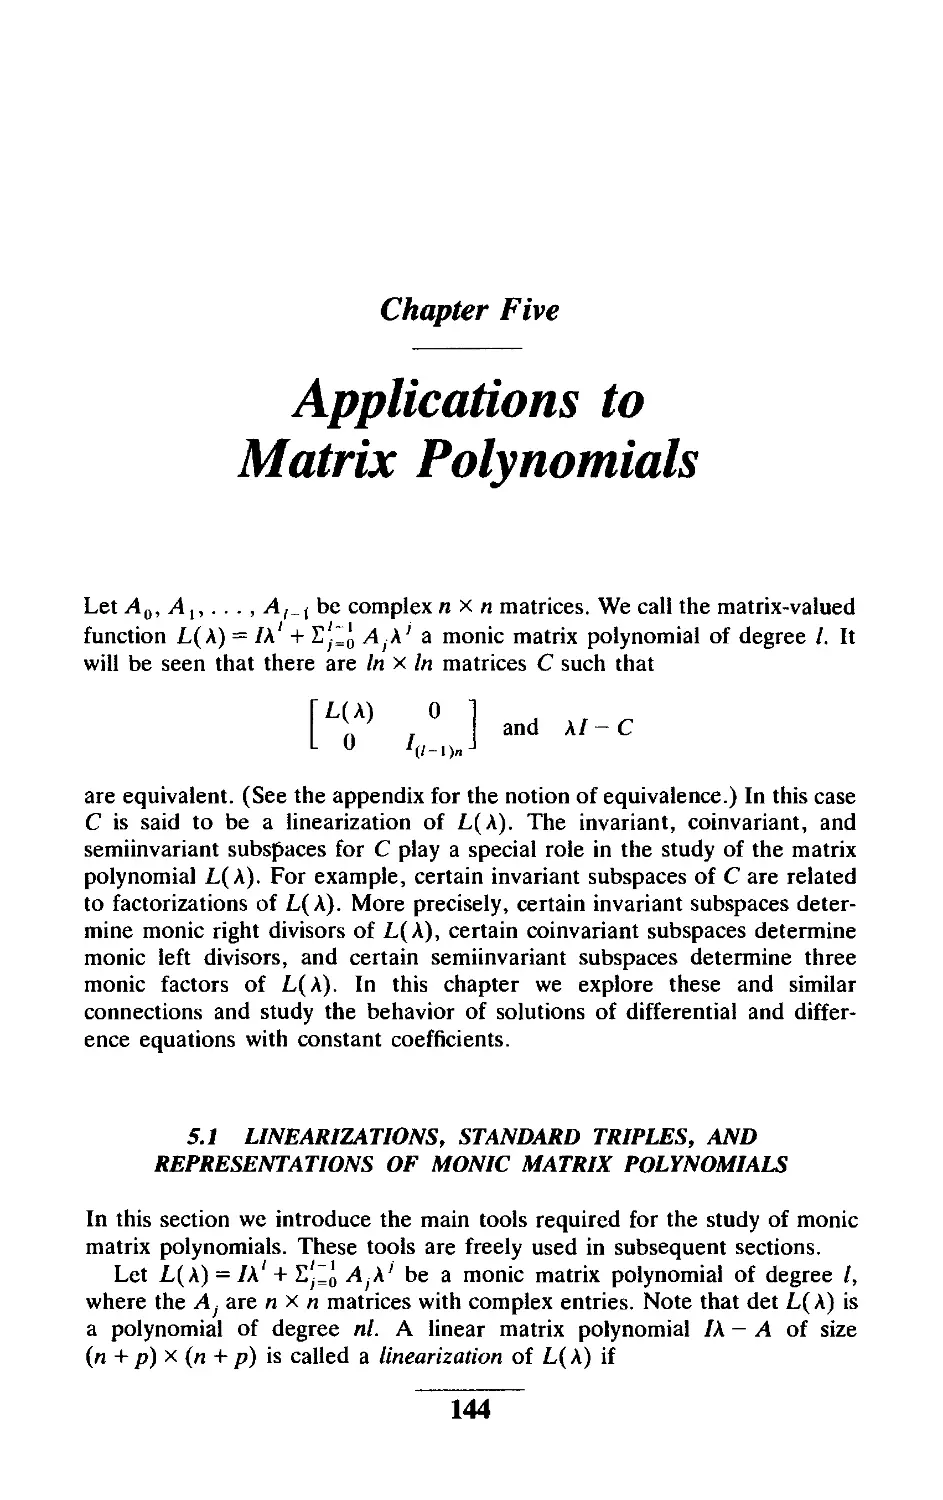 Chapter Five Applications to Matrix Polynomials